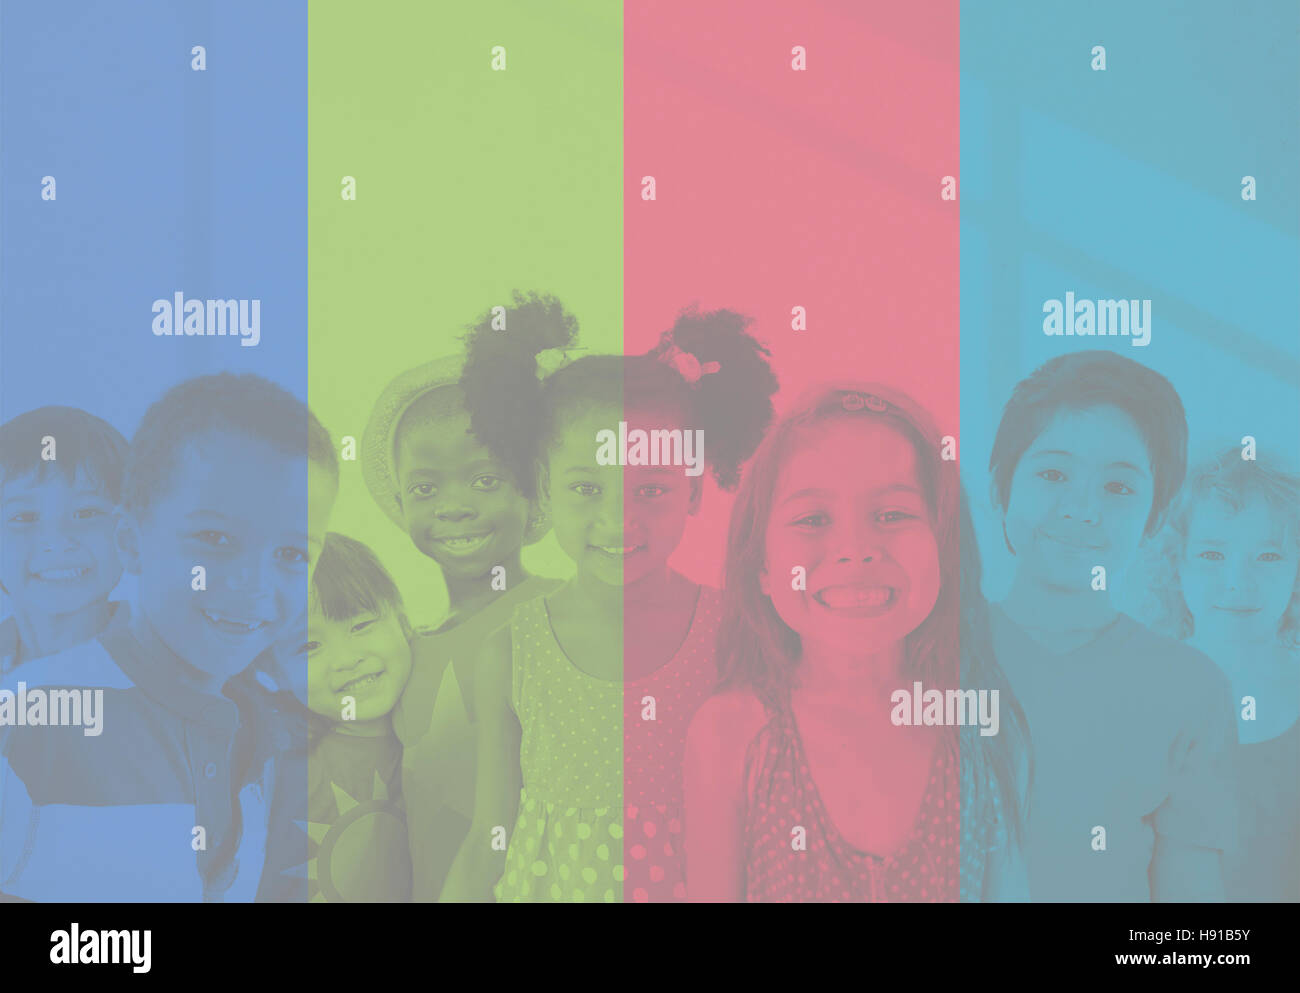 Diversity Children Friendship Innocence Smiling Concept Stock Photo